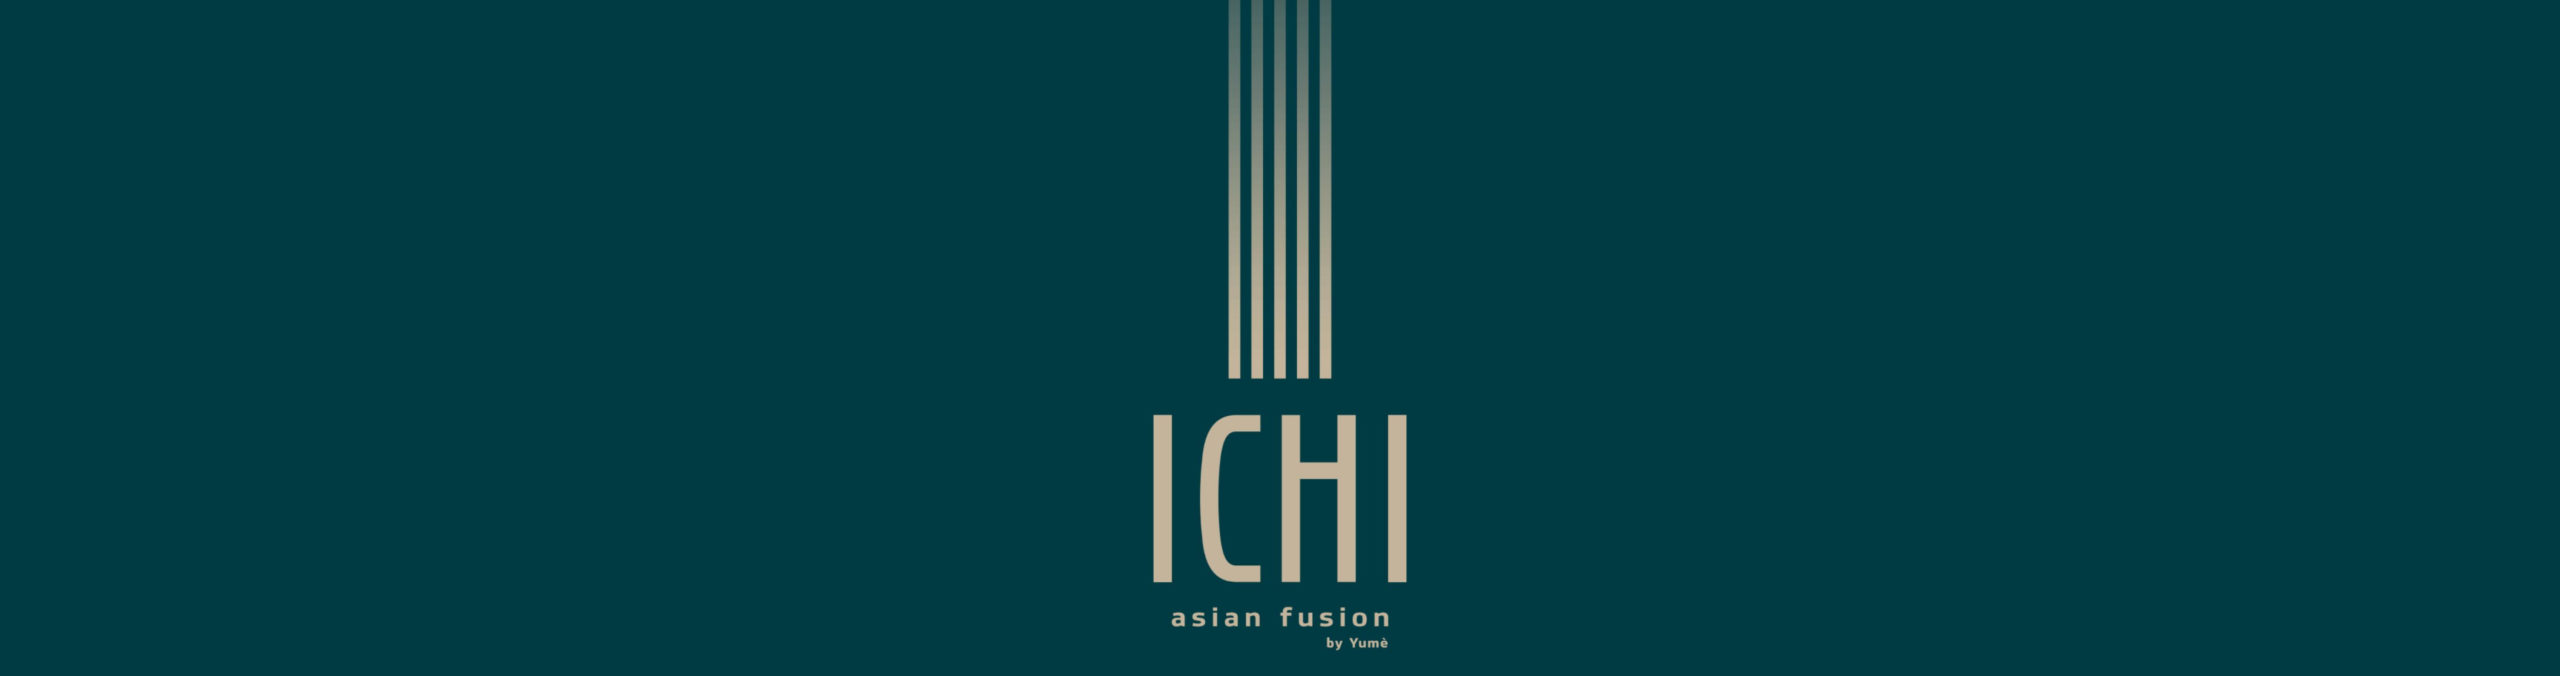 ichi-contattaci-logo